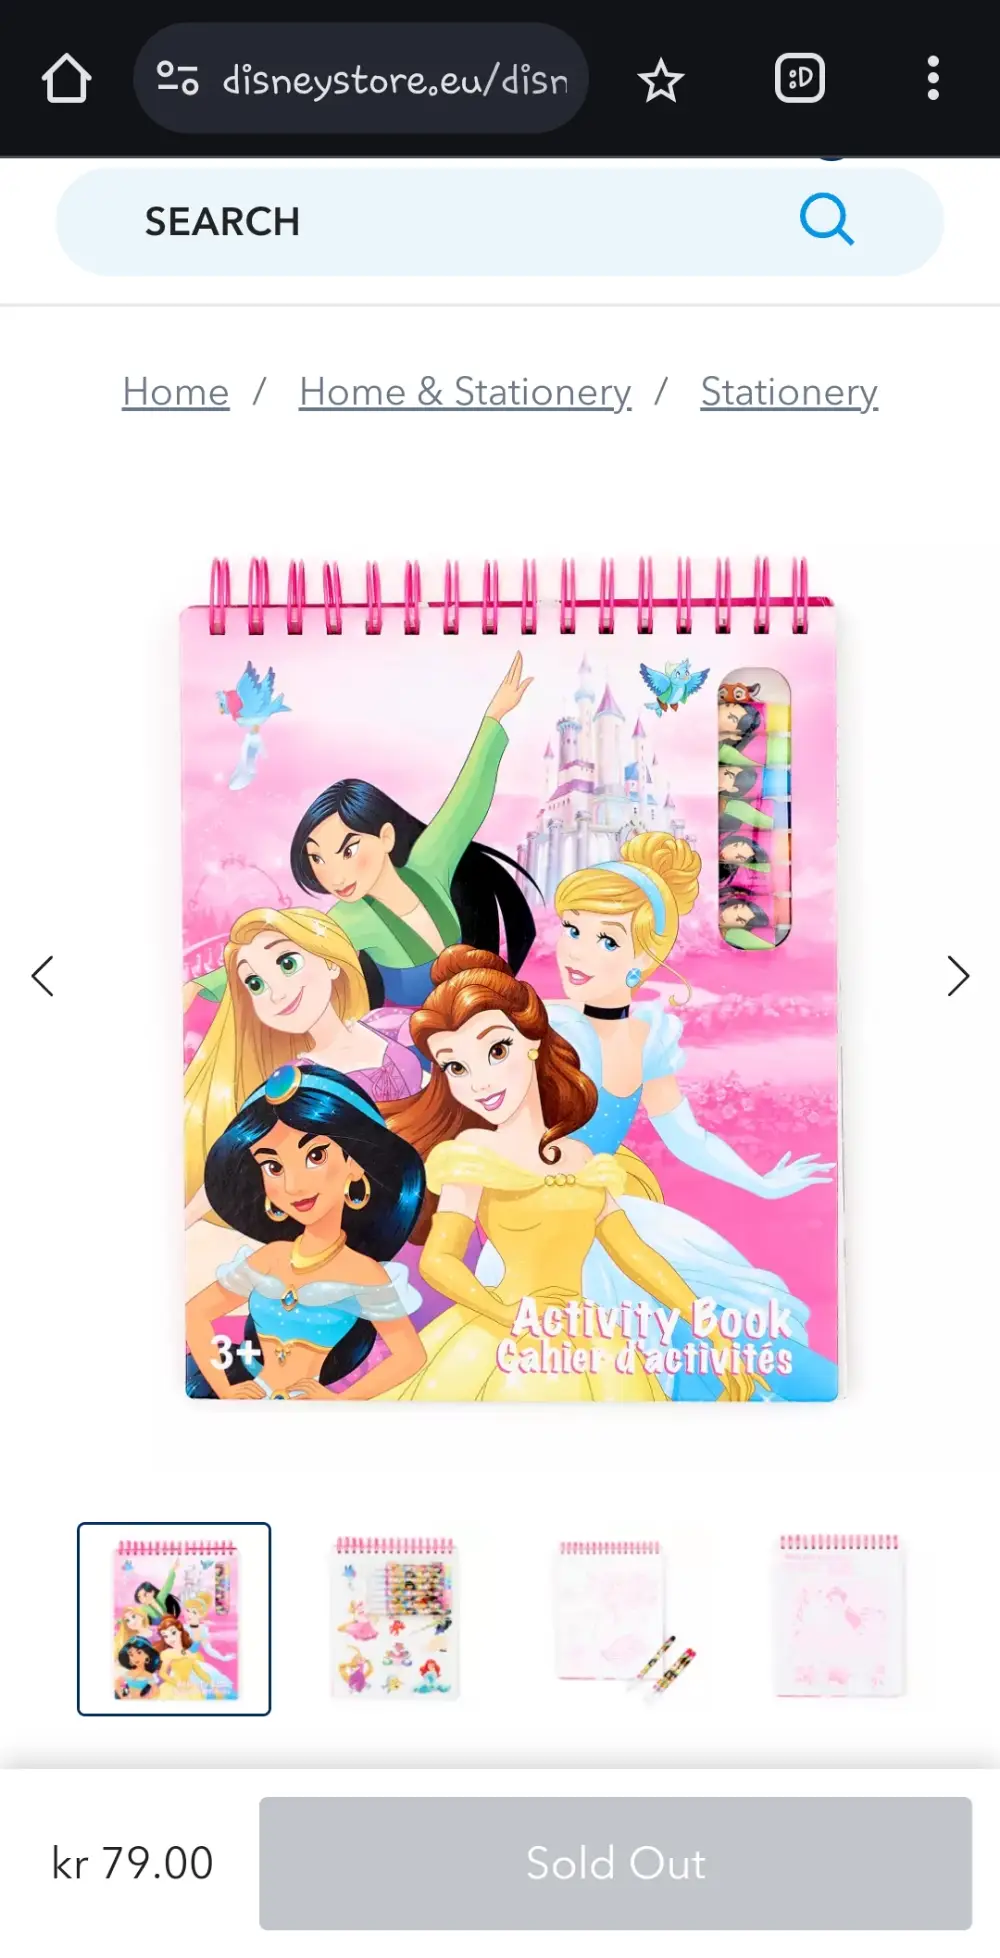 Disney prinsesse aktivitetsbog Malebog / aktivitetsbig